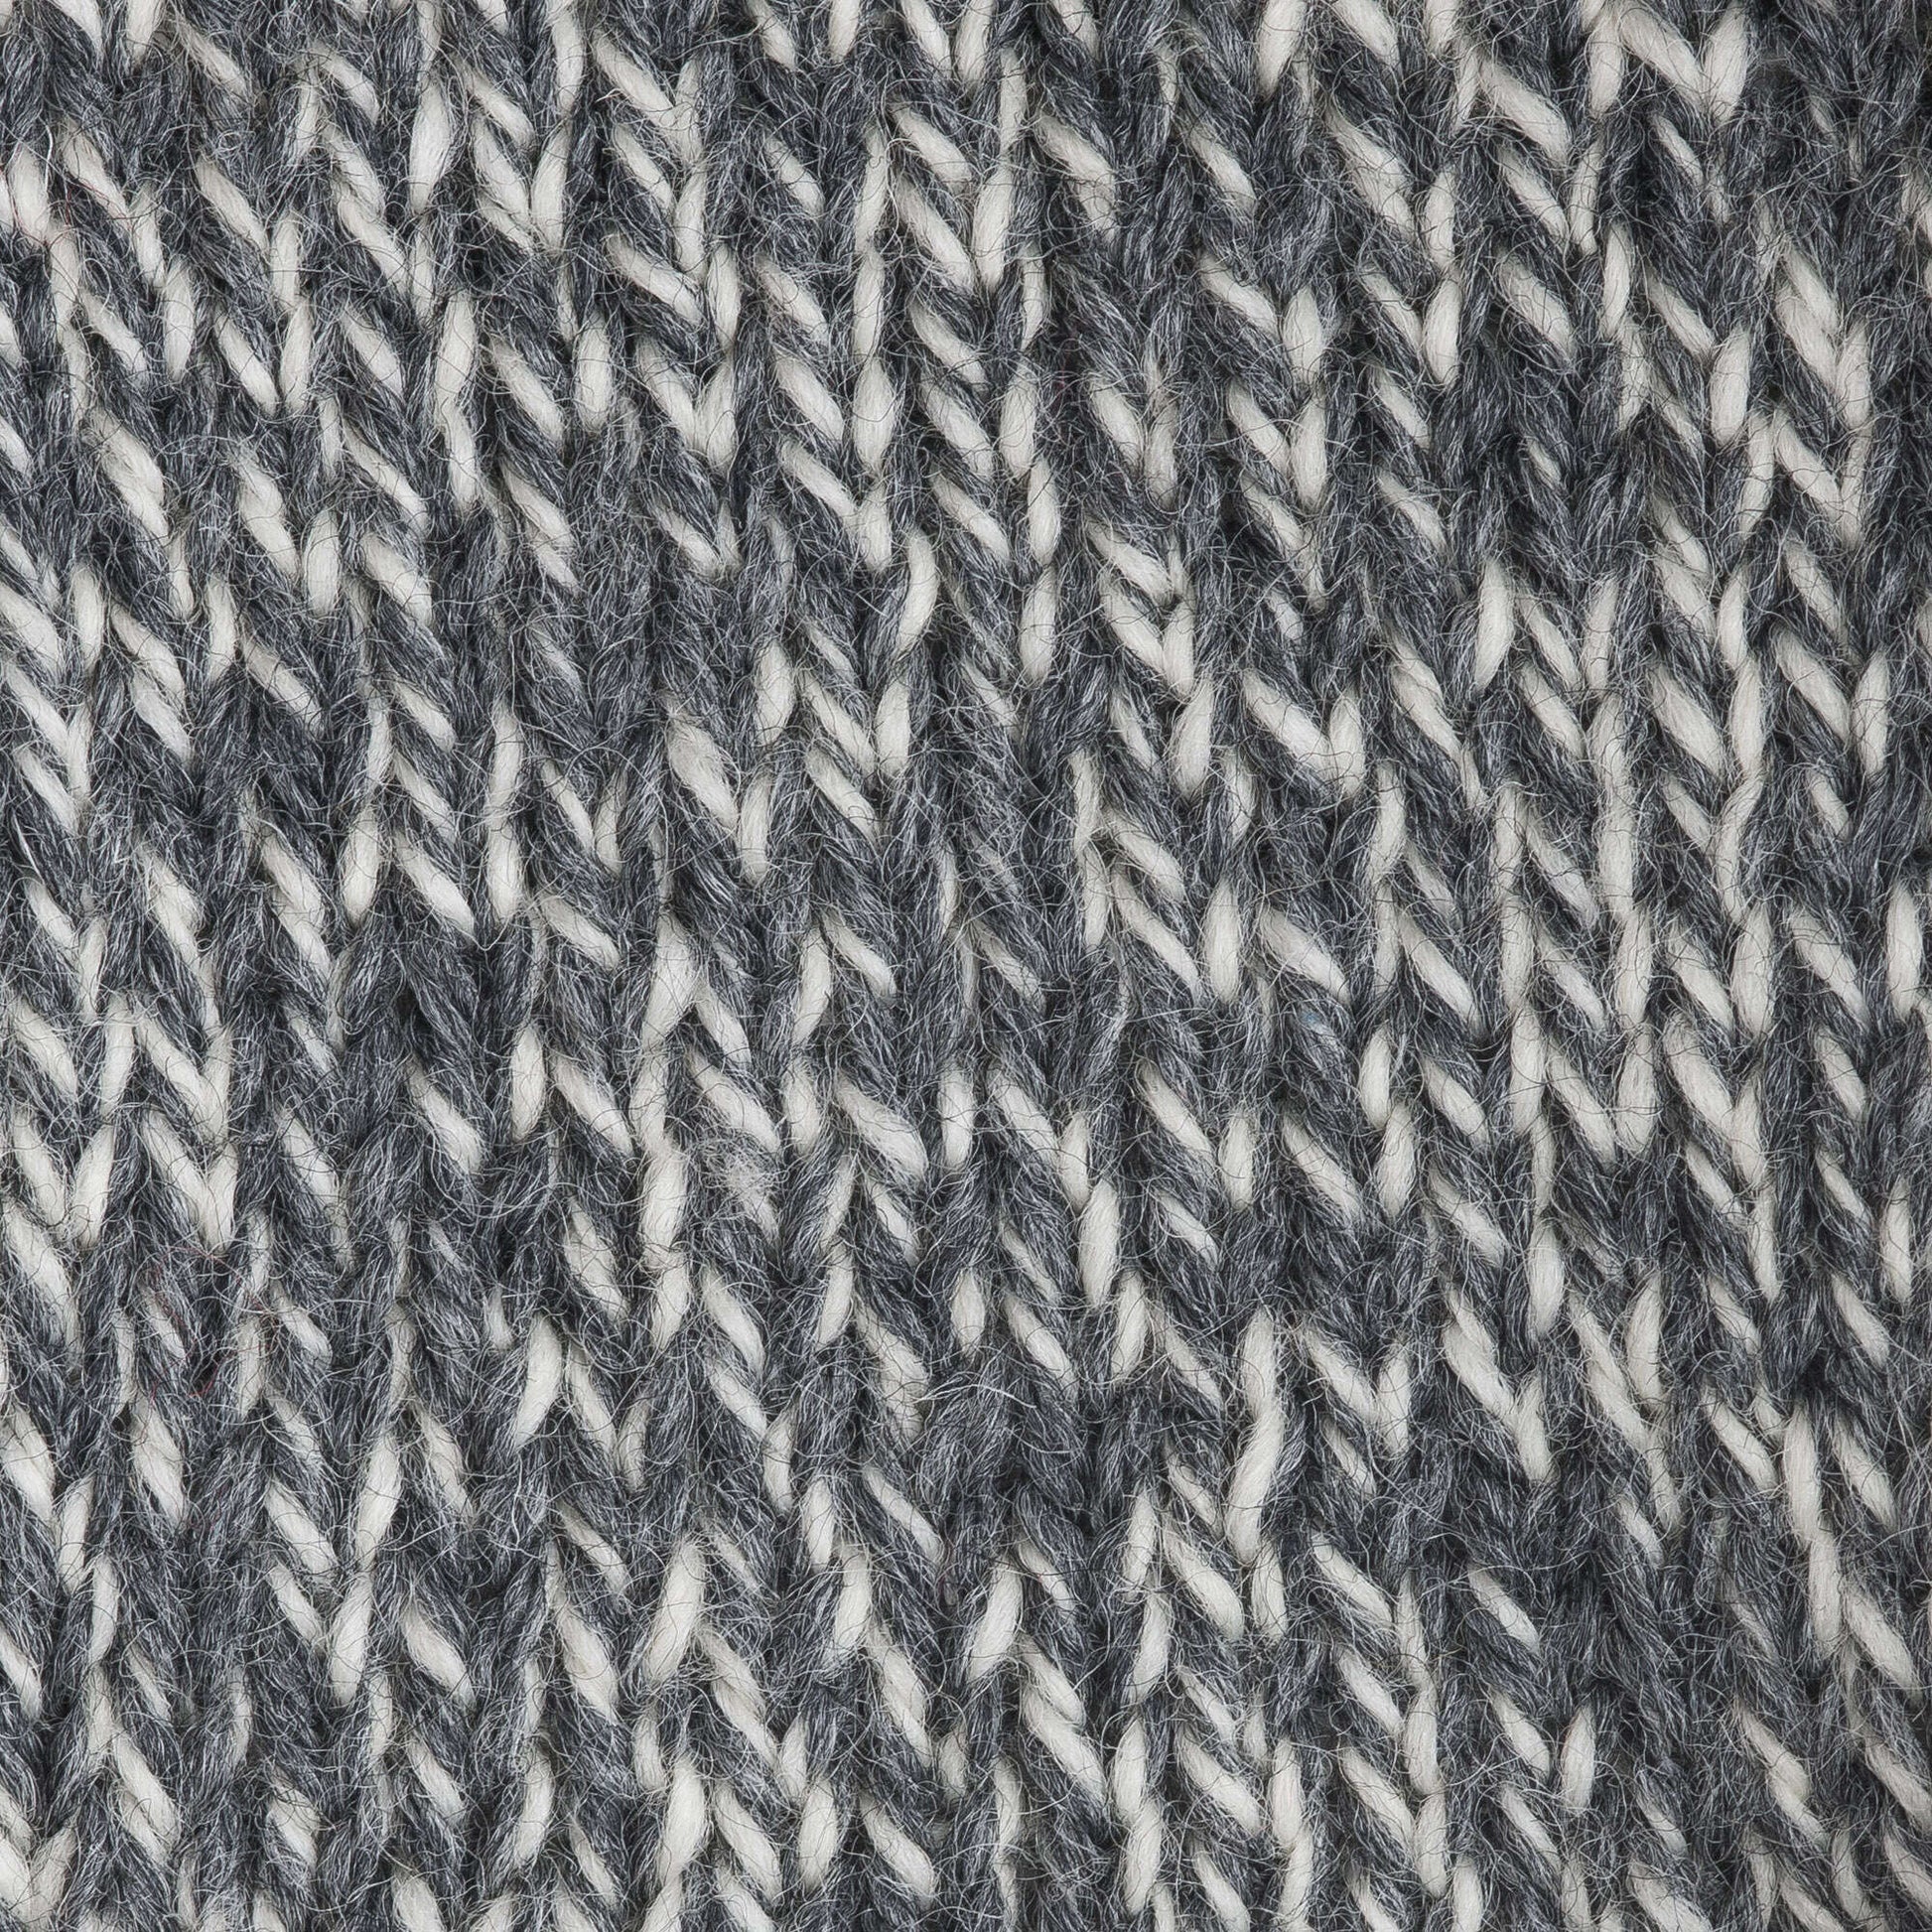 Patons Classic Wool Worsted Yarn Dark Gray Marl